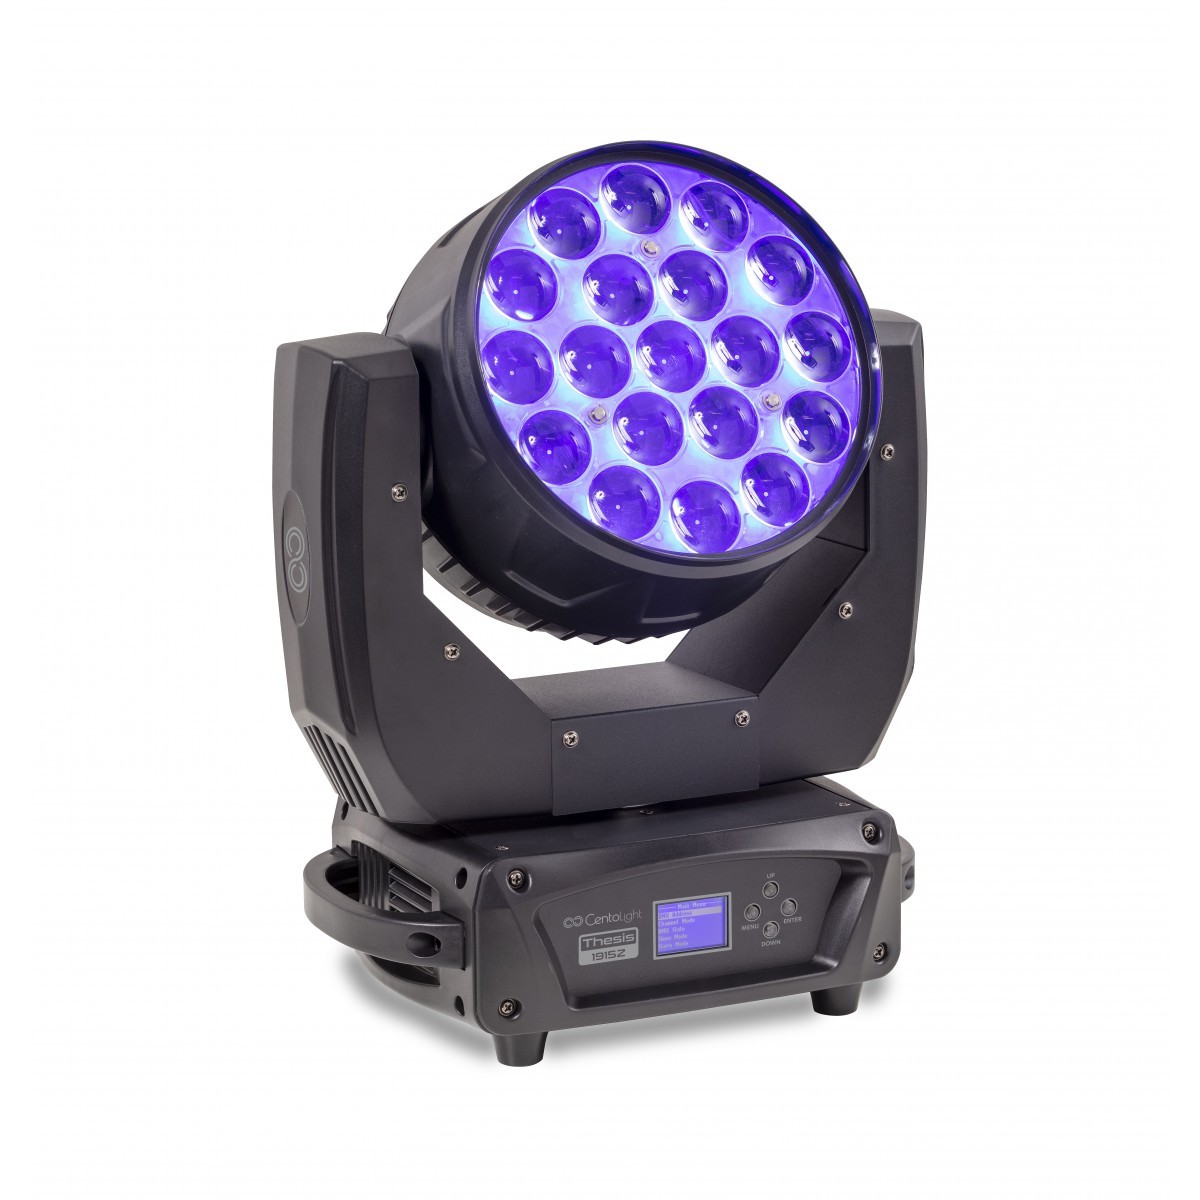 Testa Mobile LED con zoom Thesis 1915 Z 19 x 15W – CENTOLIGHT – ppIANISSIMO